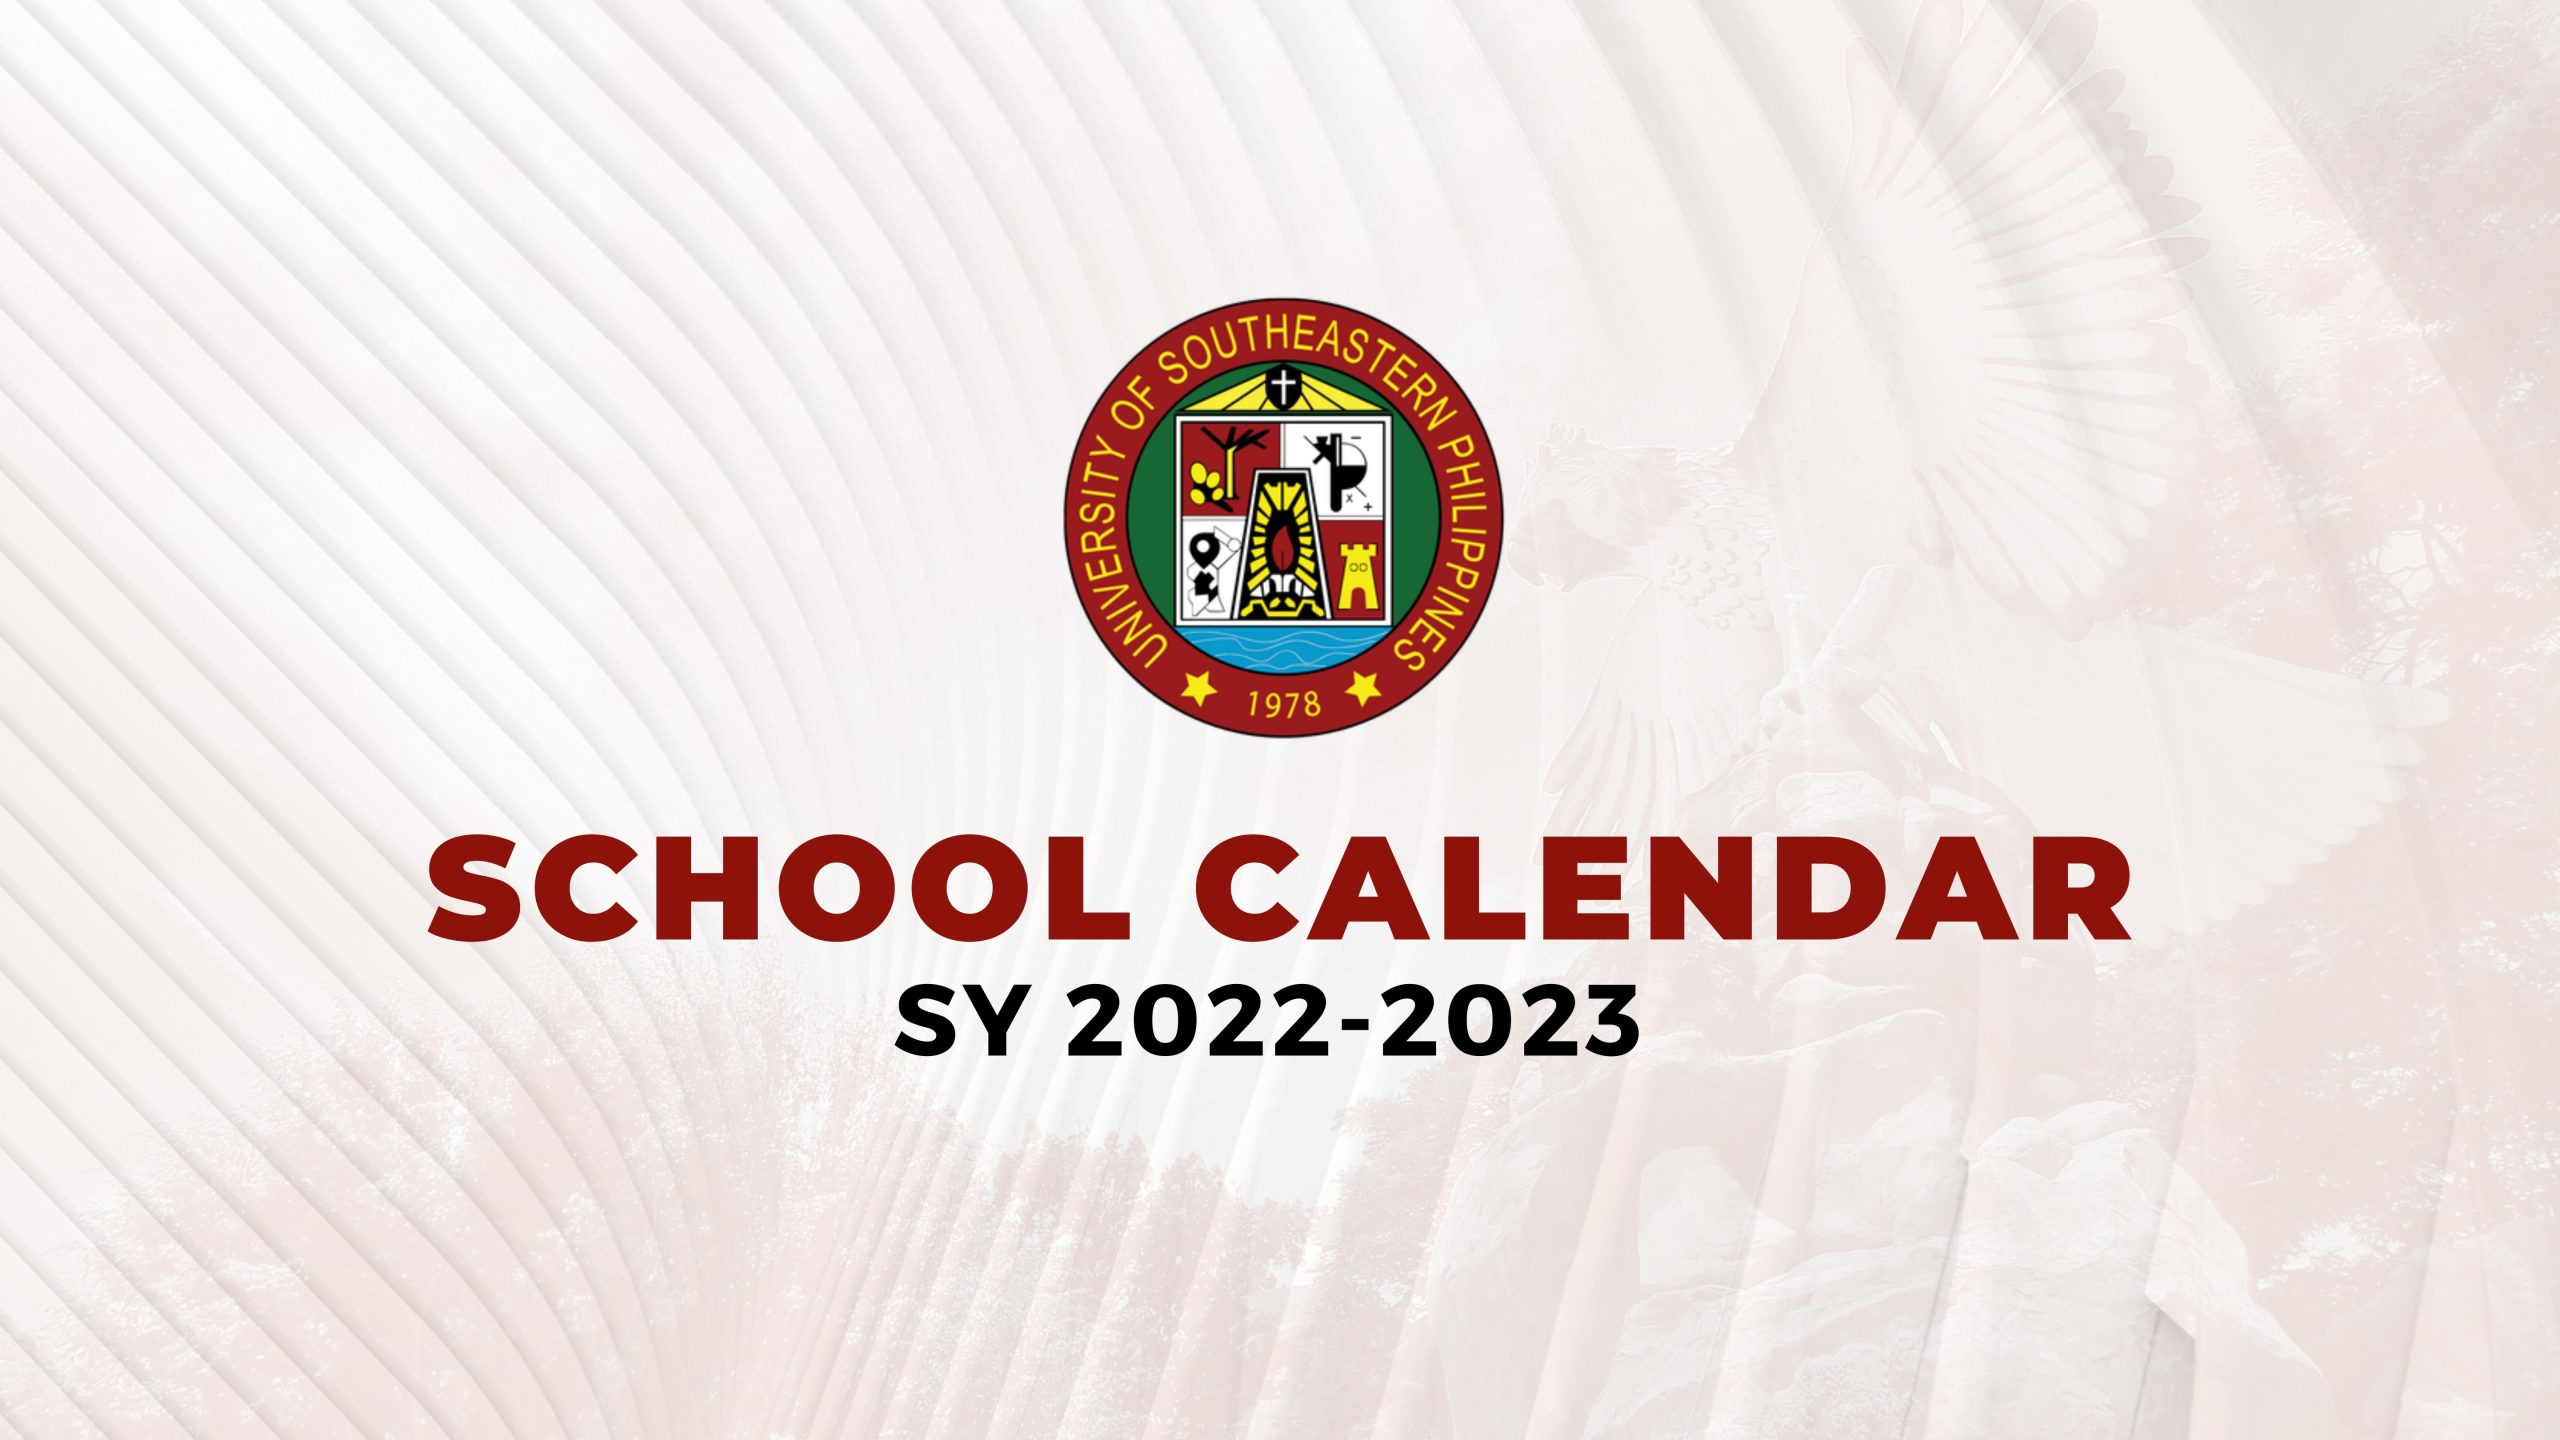 USeP Amended School Calendar for the School Year 2022-2023